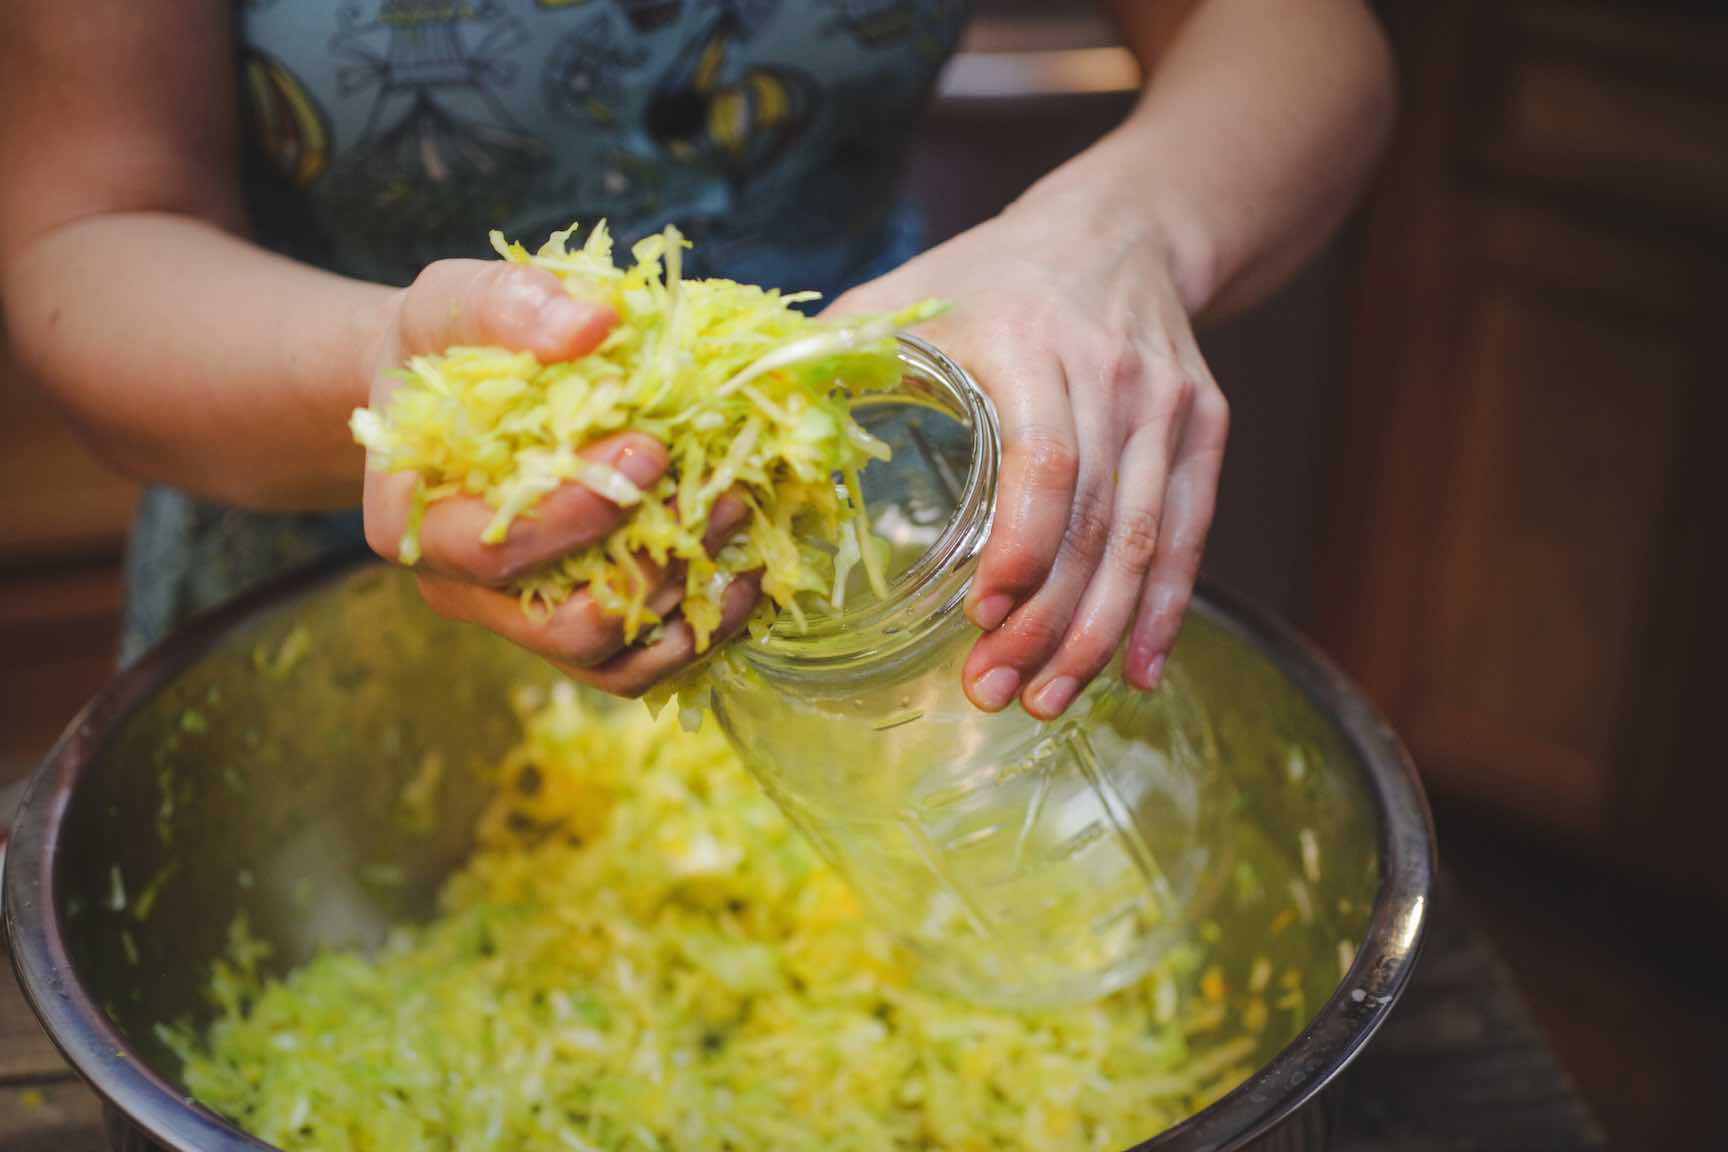 immunity boost sauerkraut recipe healthy ferment